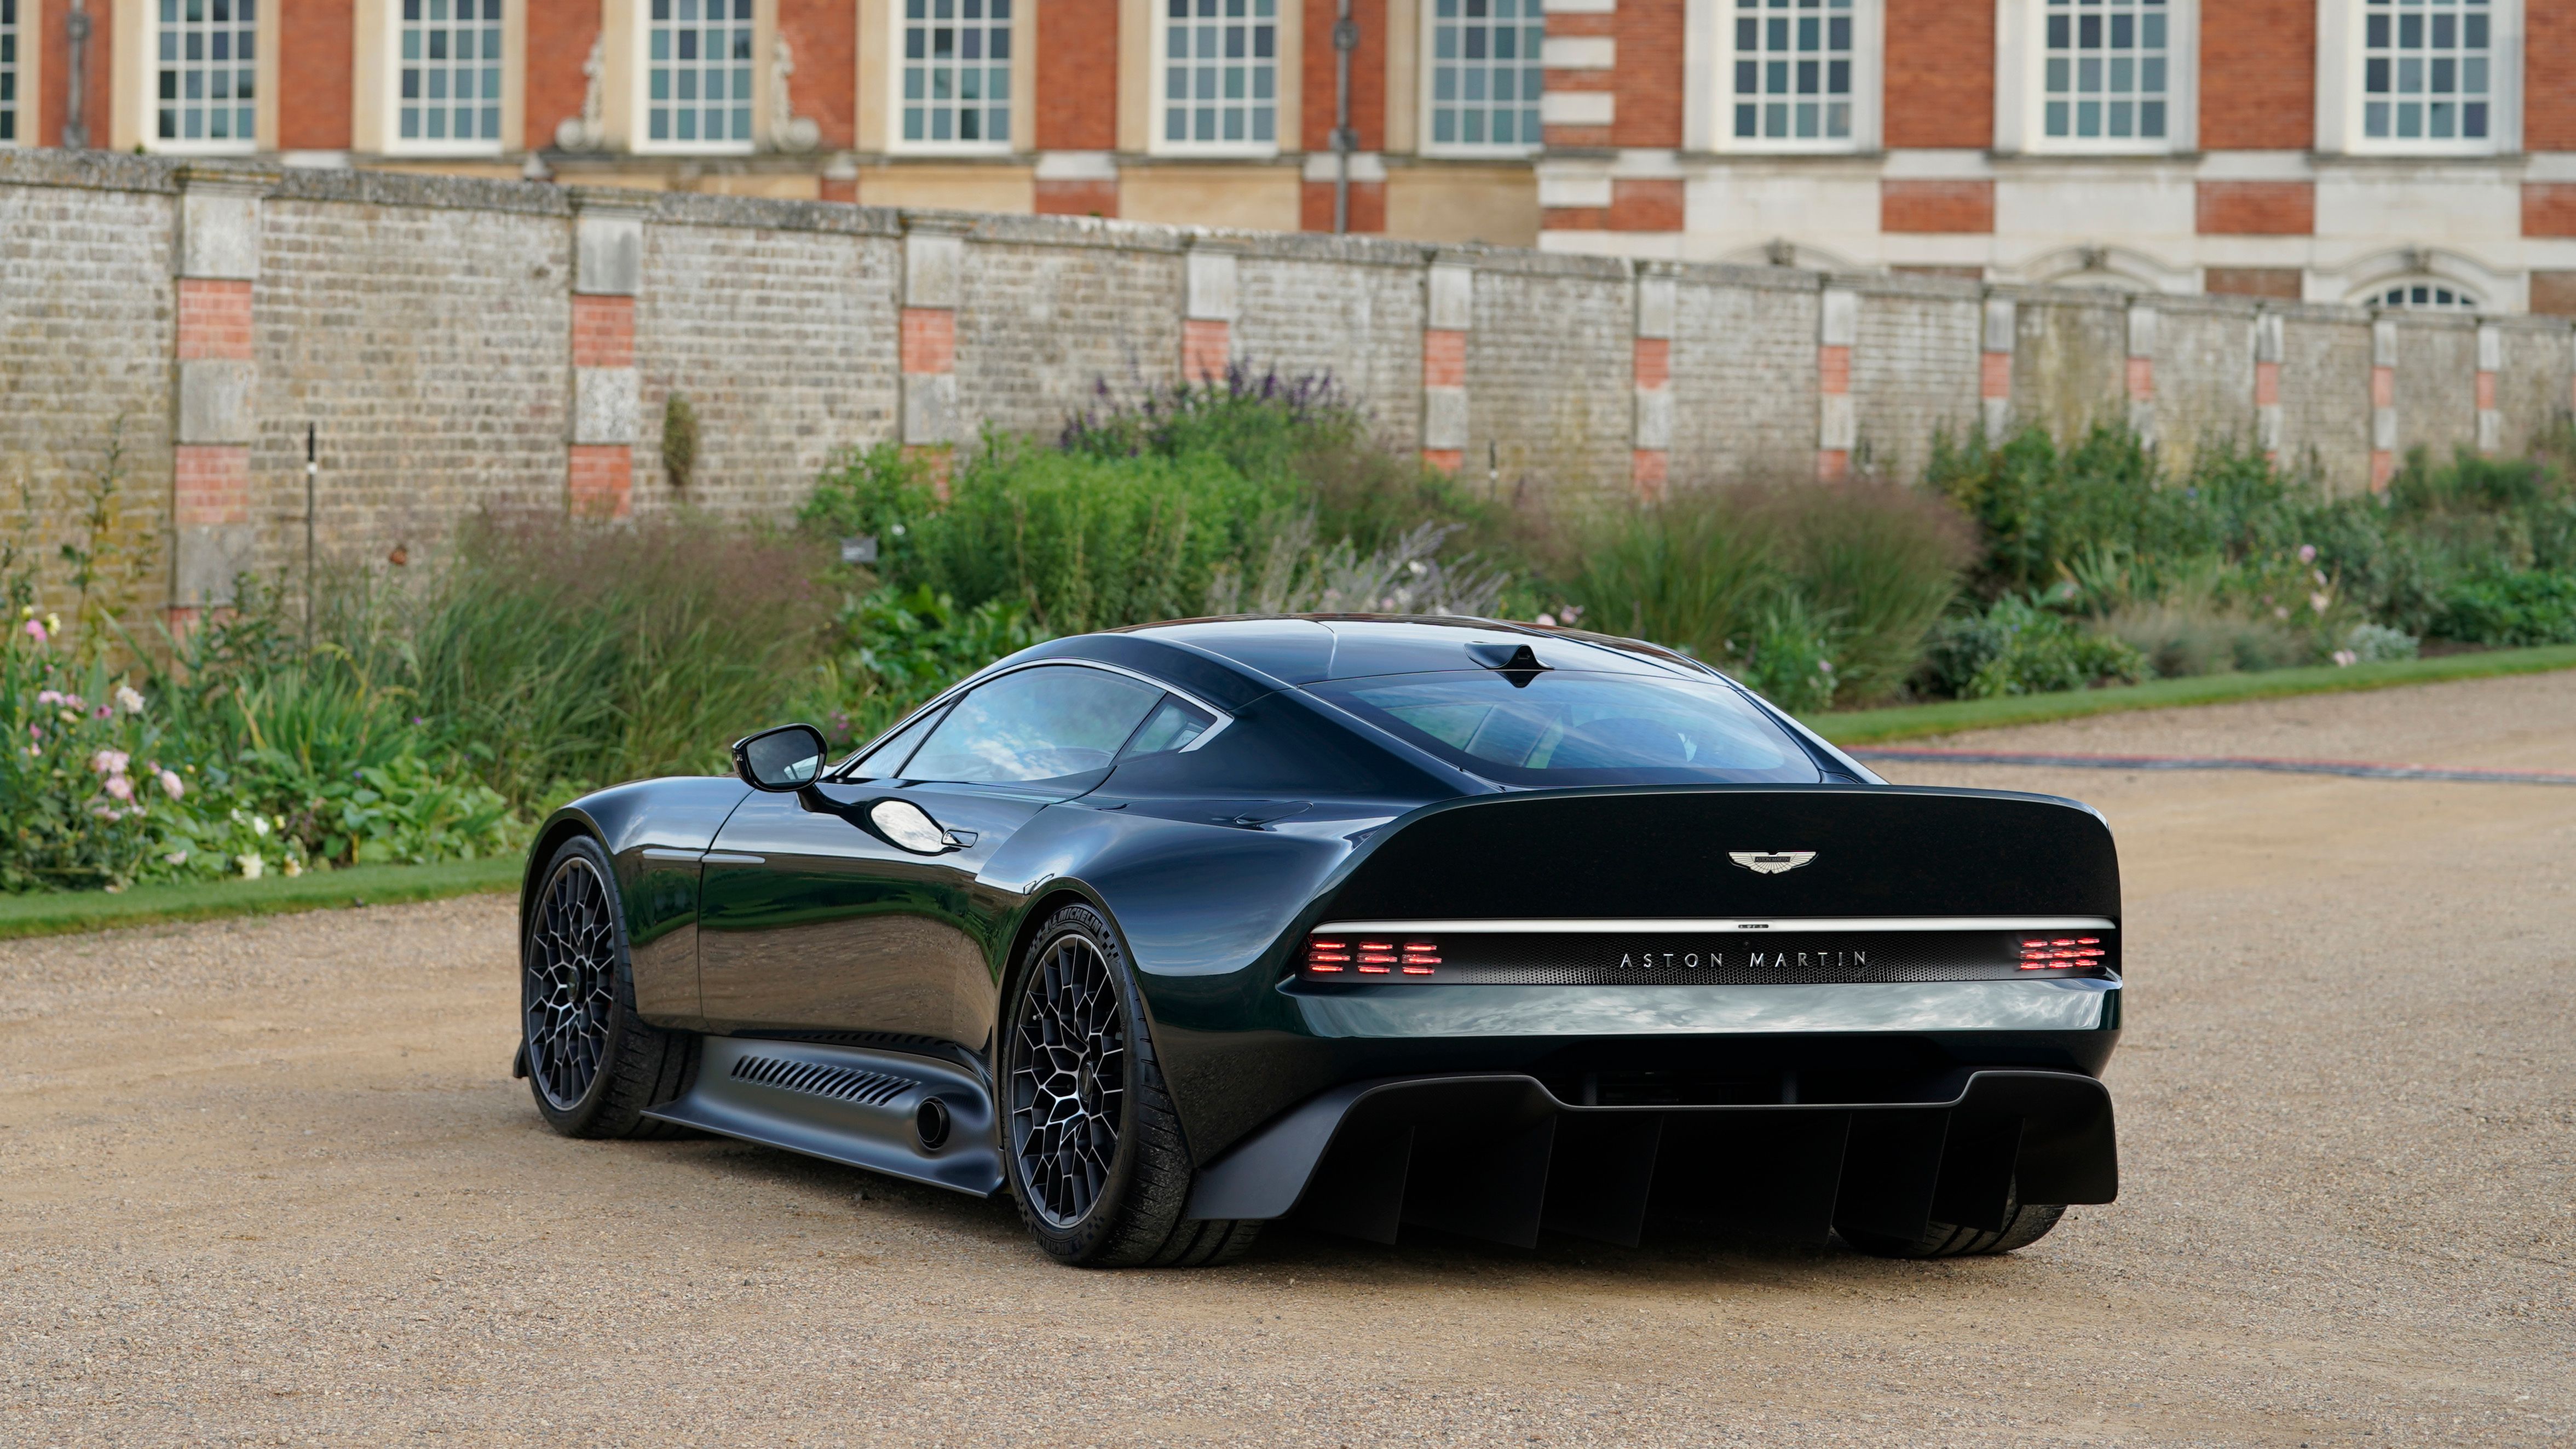 A black 2020 Aston Martin Victor